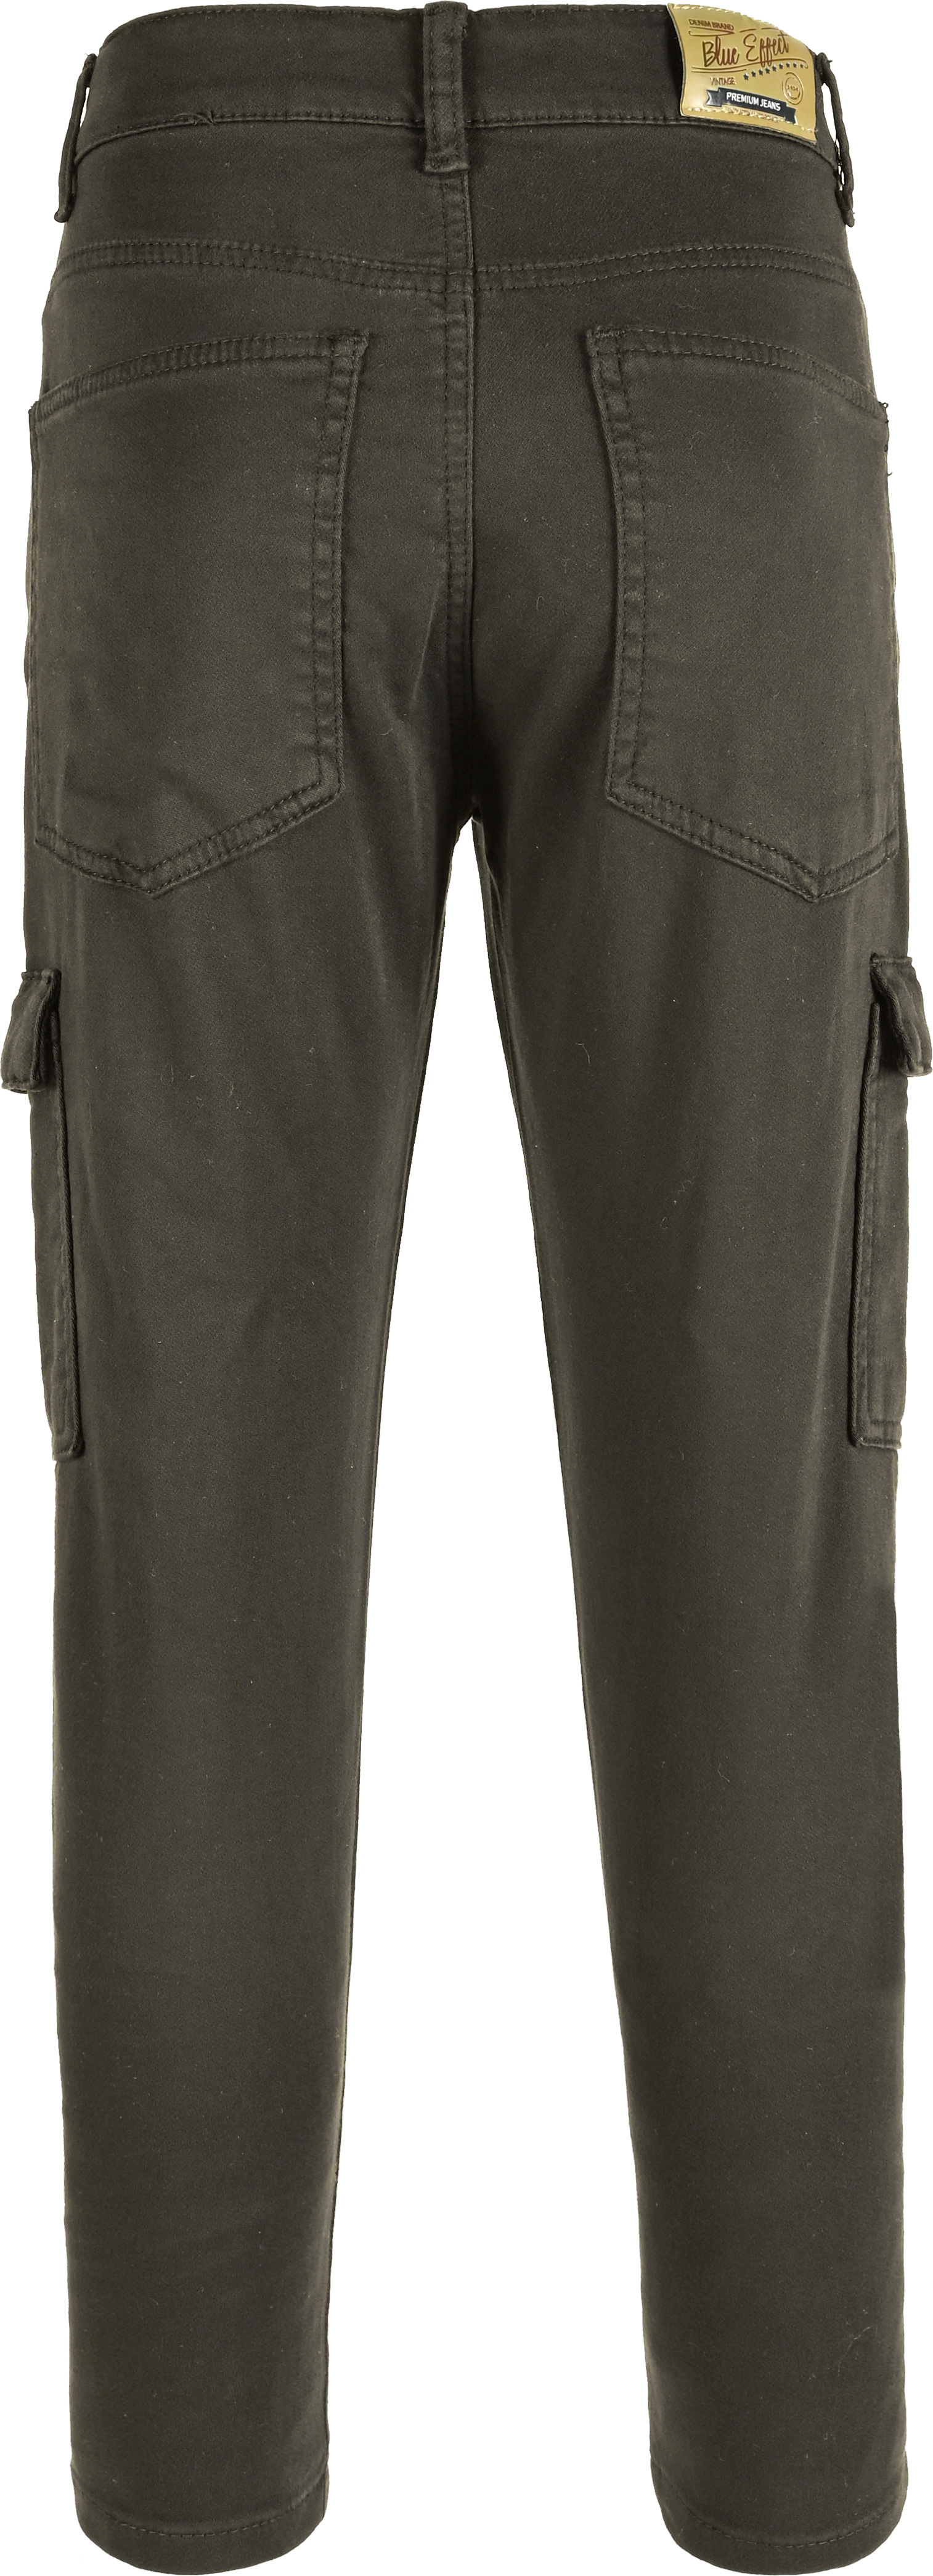 2836-Boys Cargo Loose Fit Pant verfügbar in Normal